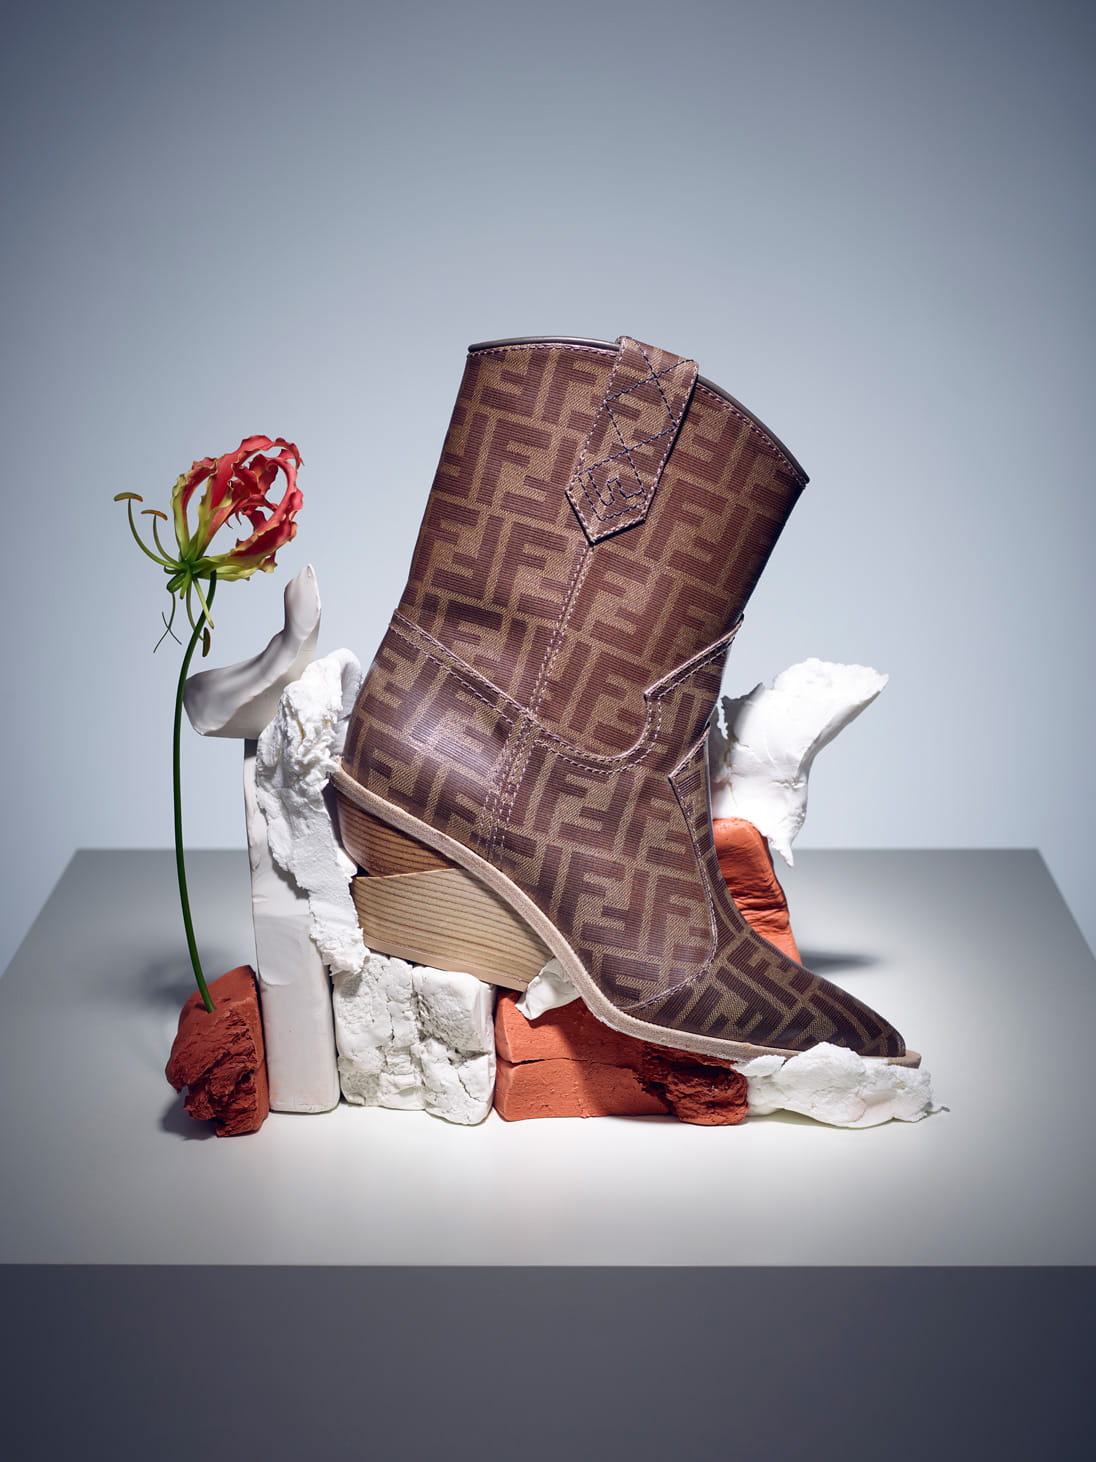 Cowboy boot in Fendi’s glazed logo-motif pair